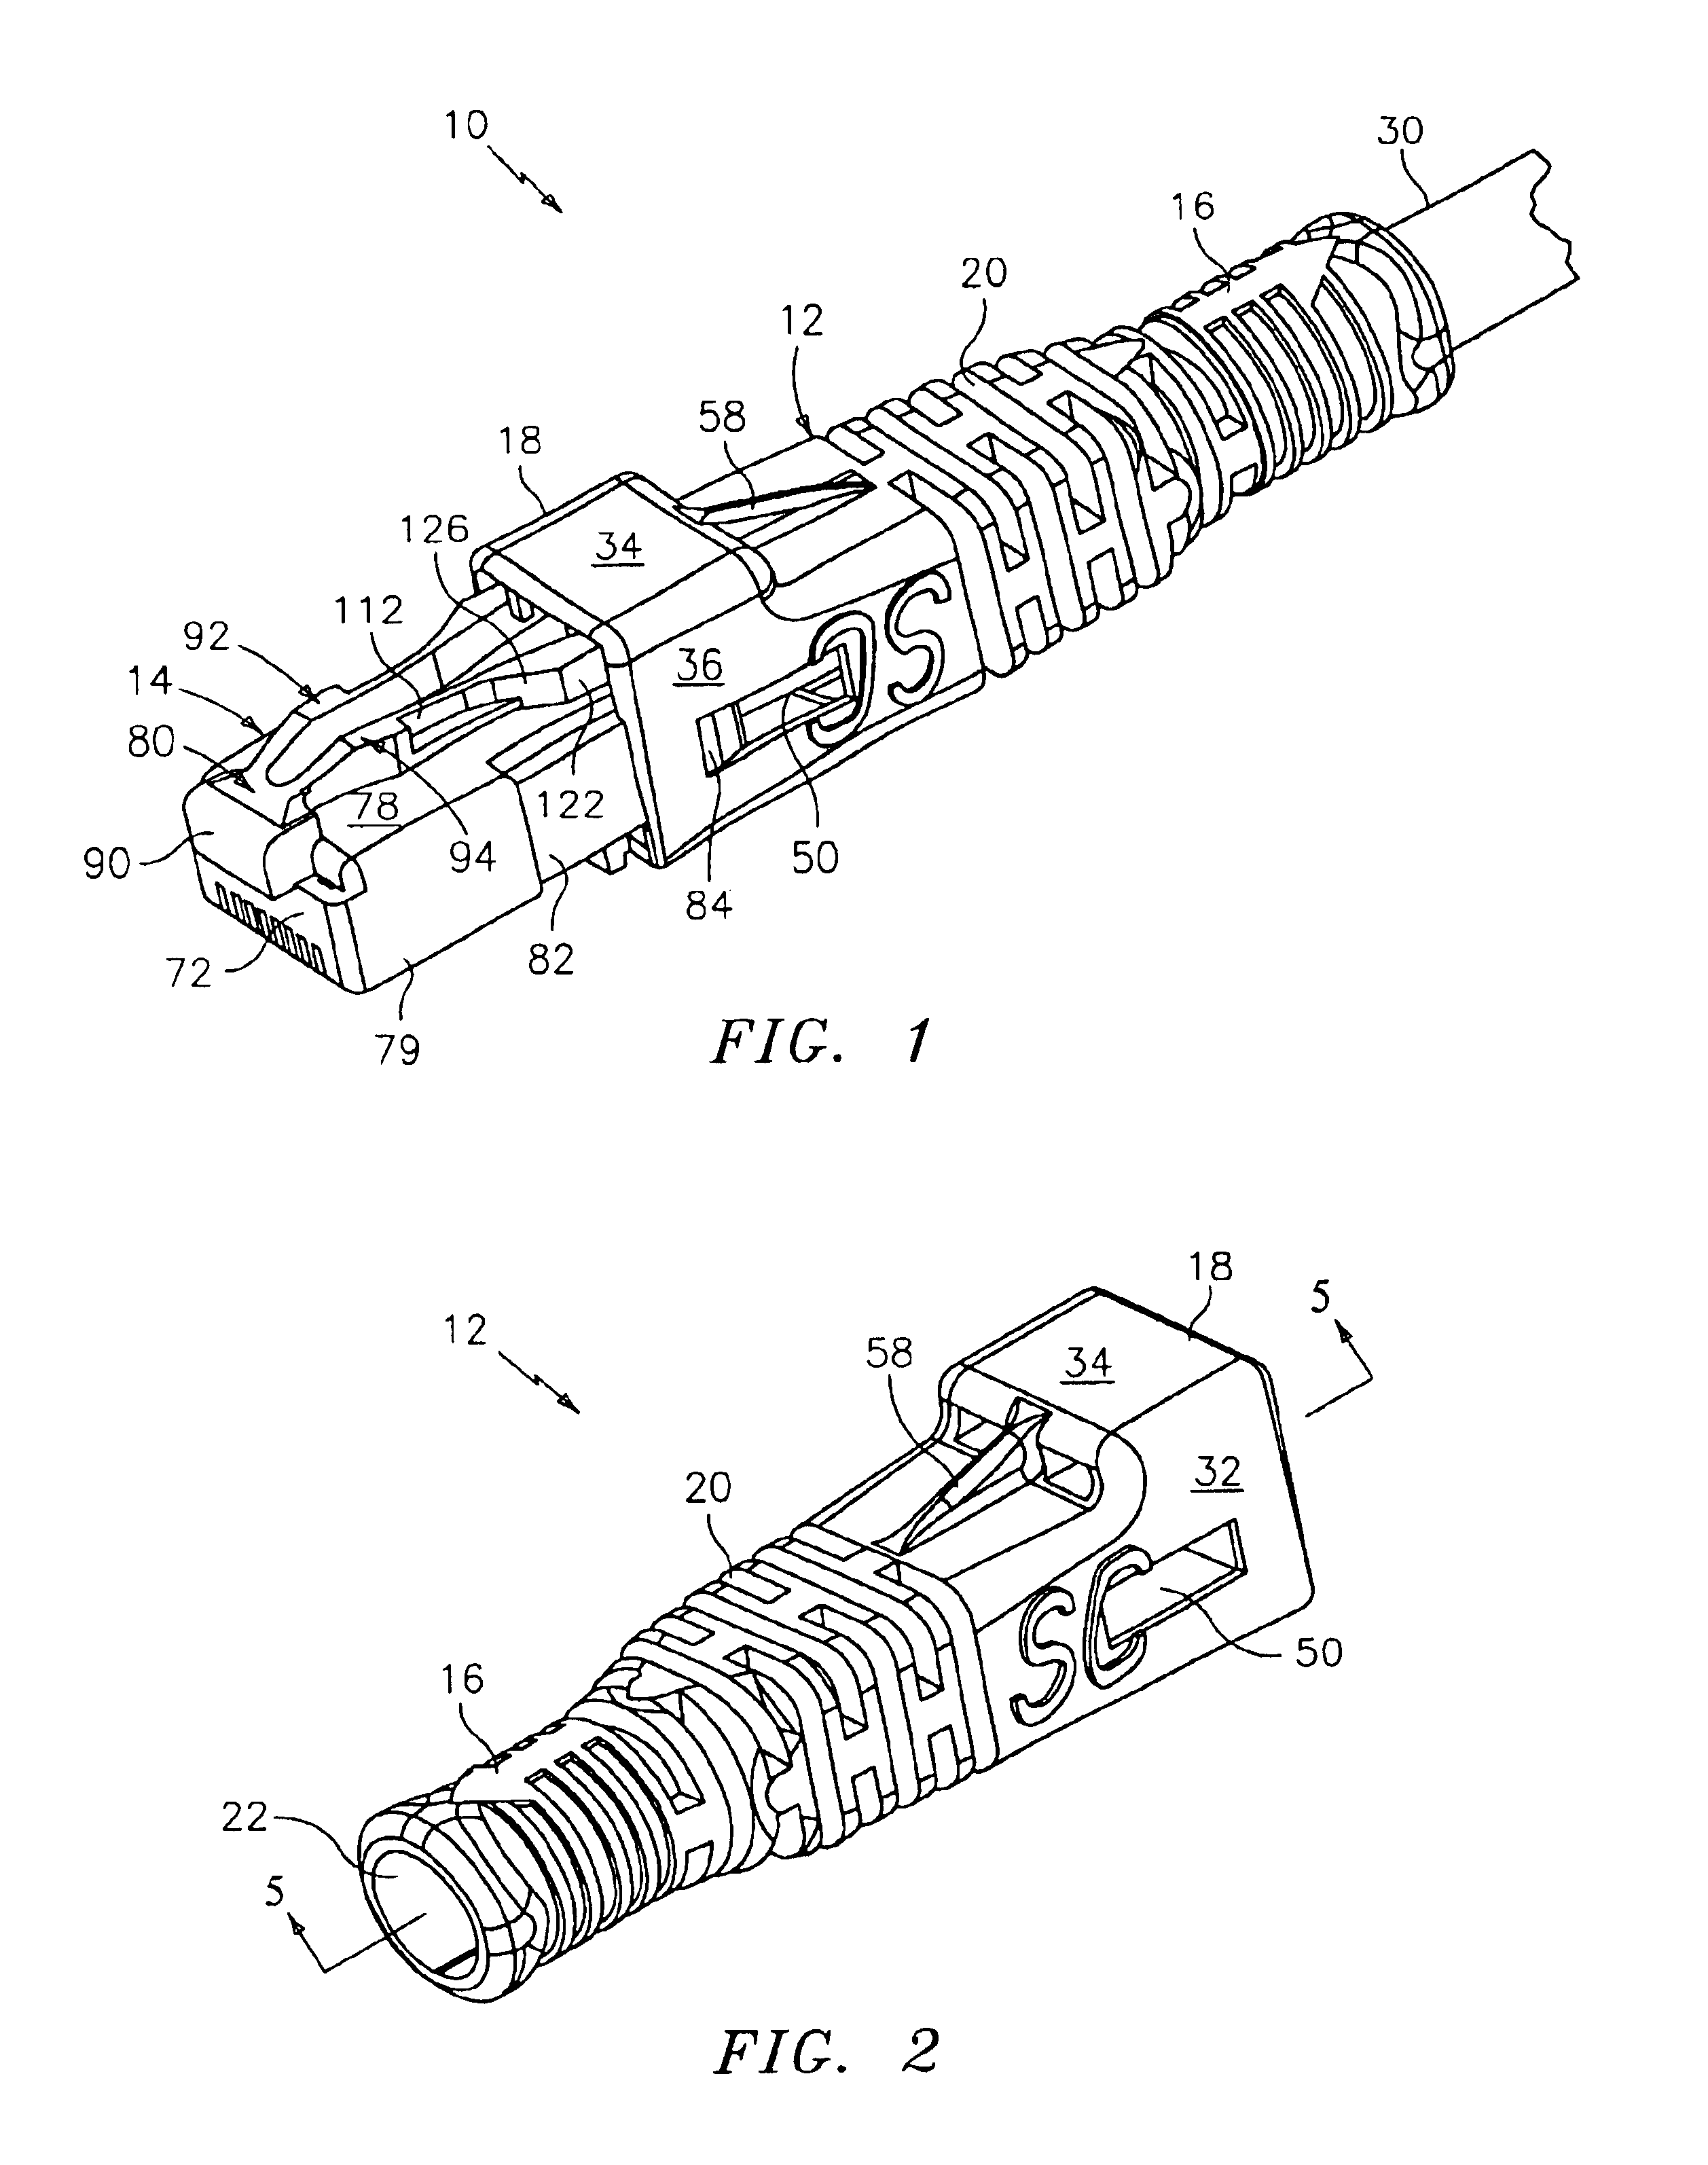 Axial latch actuator